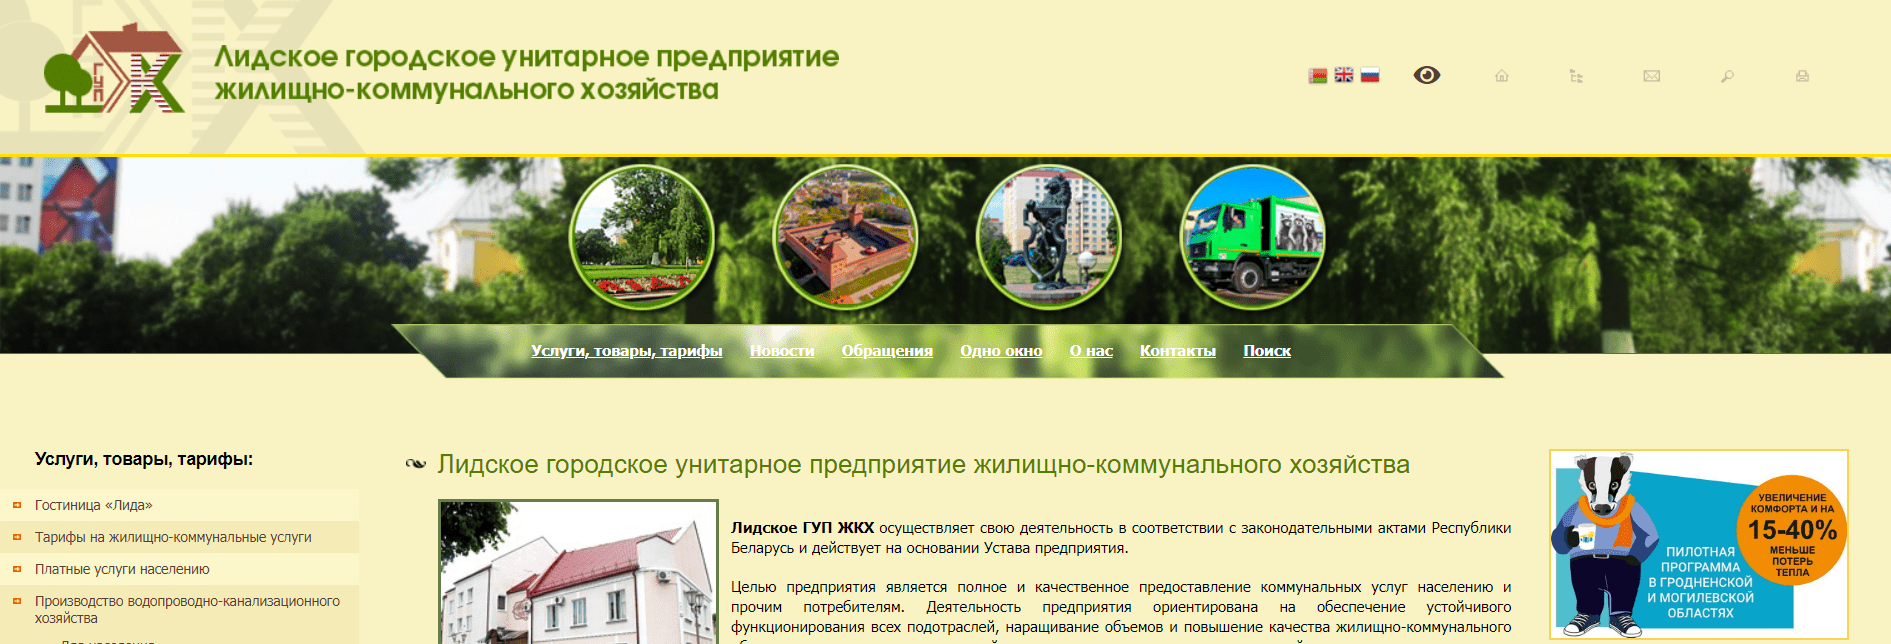 Лидское ГУП ЖКХ (gkh.lida.by) - официальный сайт